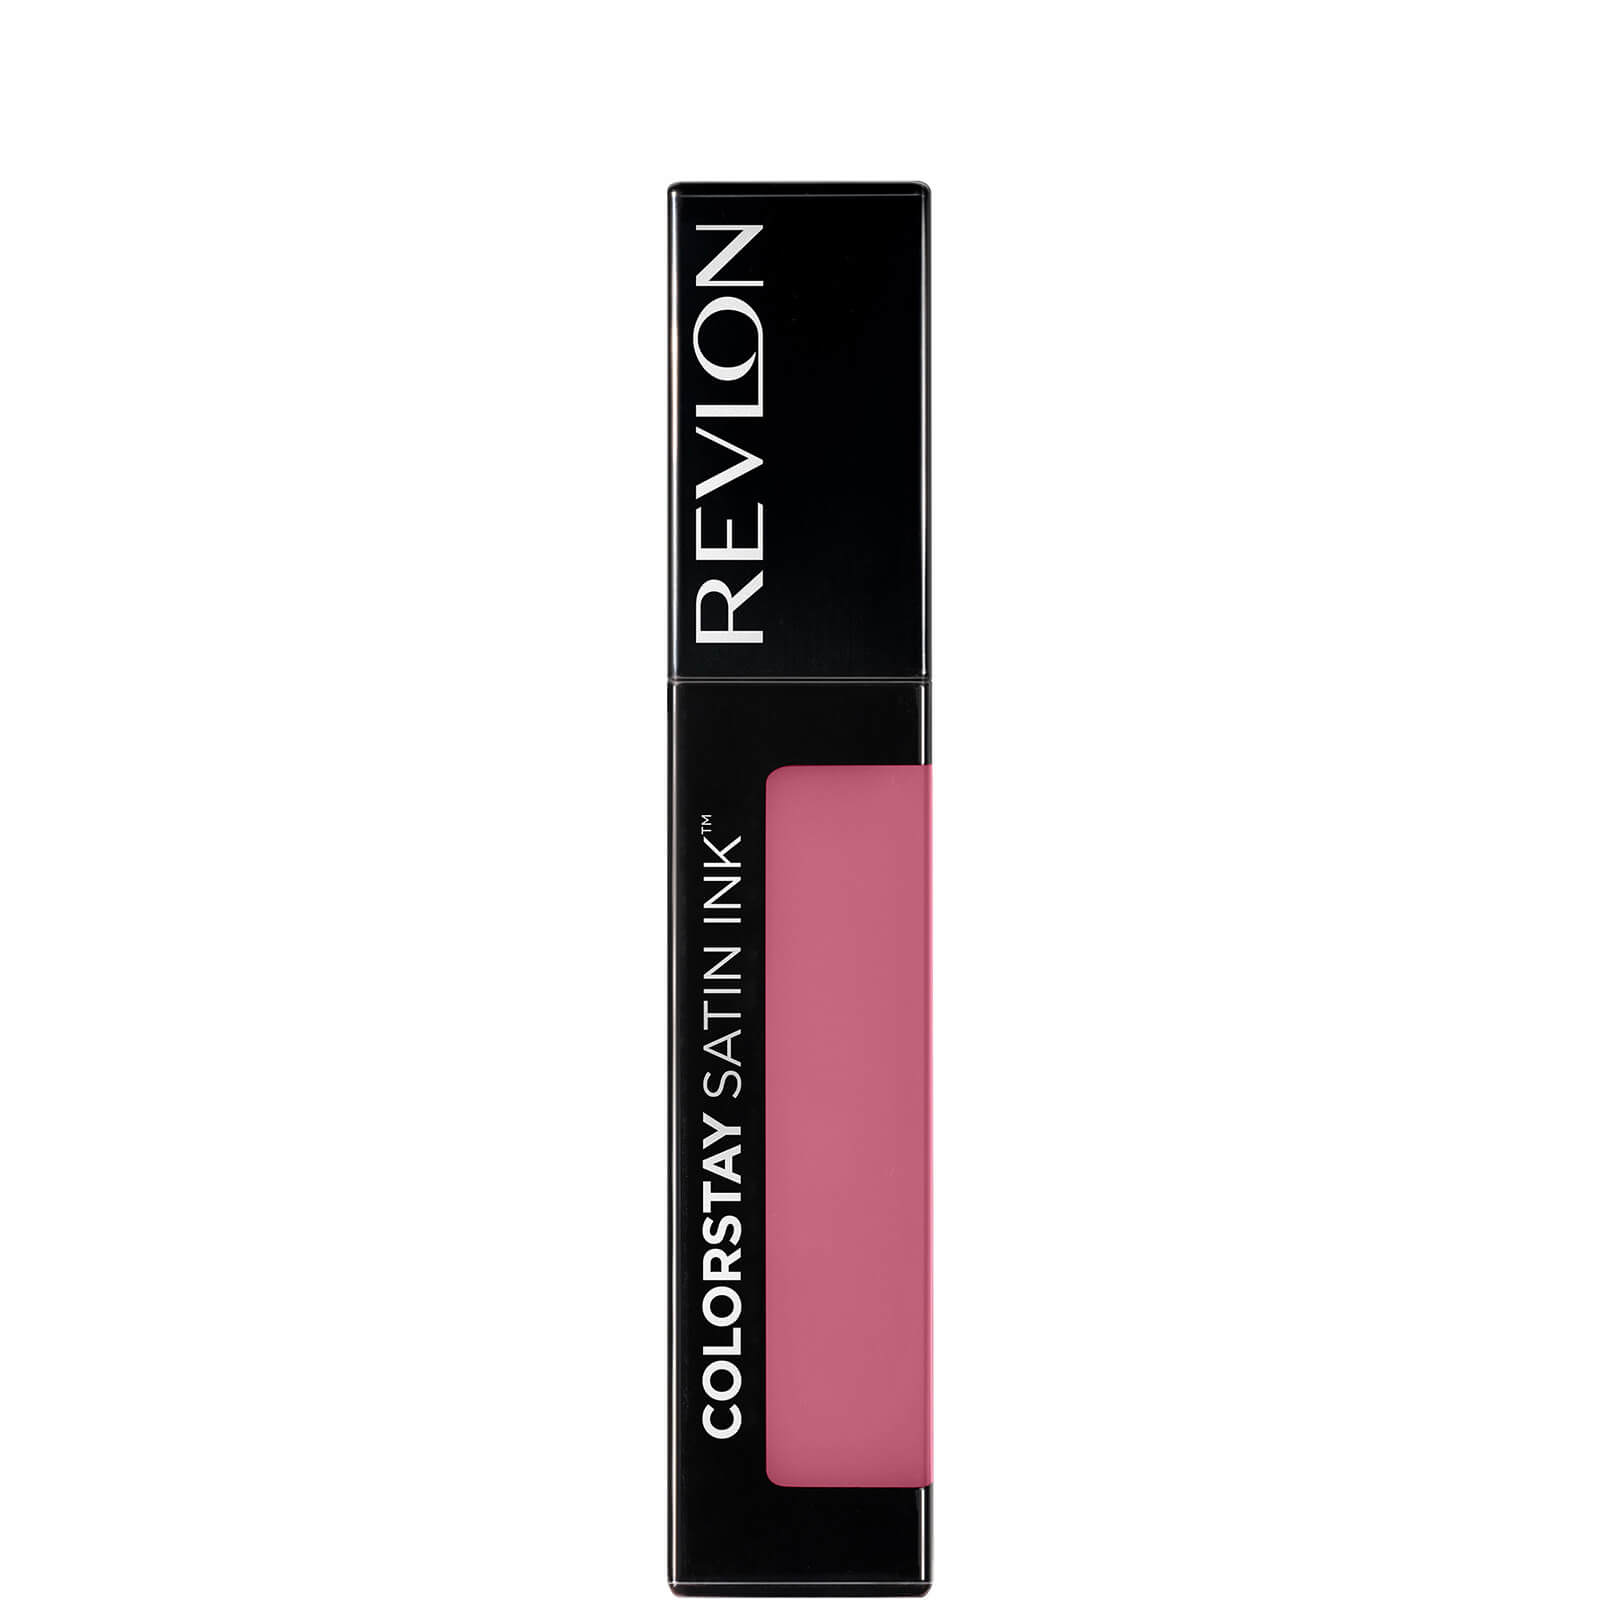 Revlon ColorStay Satin Ink 5ml (Various Shades) - Mauvey, Darling